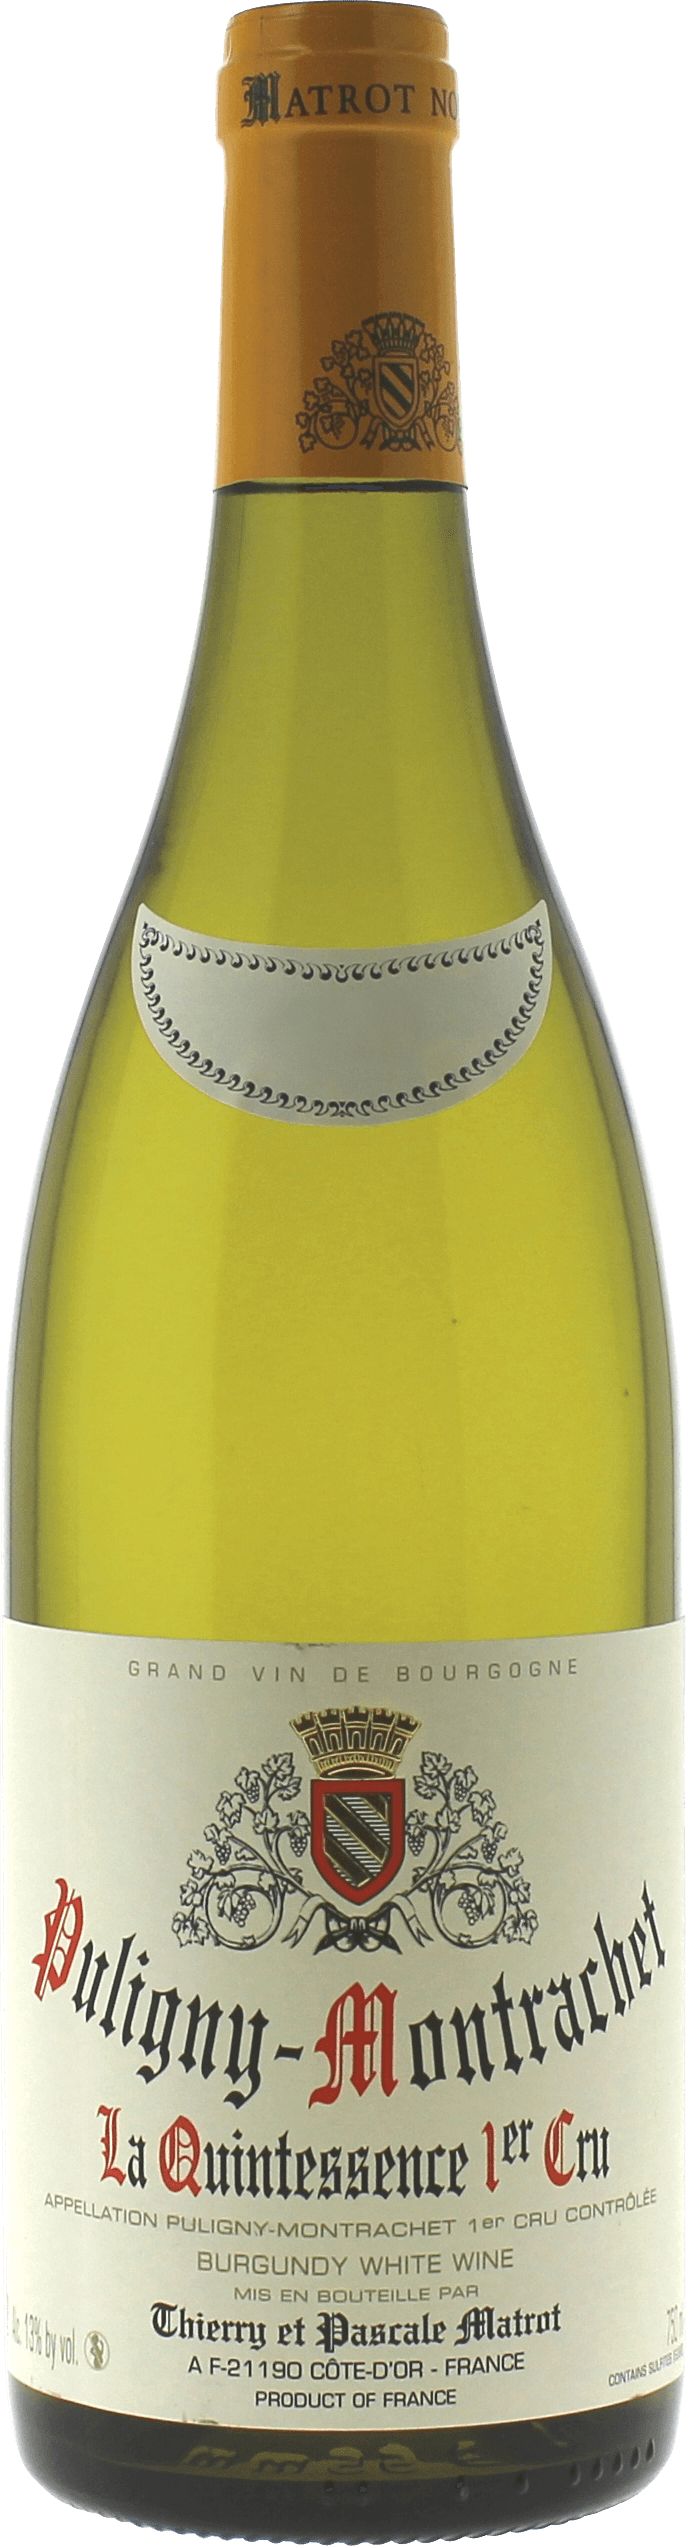 Puligny montrachet la quintessence 1er cru 2015 Domaine MATROT, Bourgogne blanc